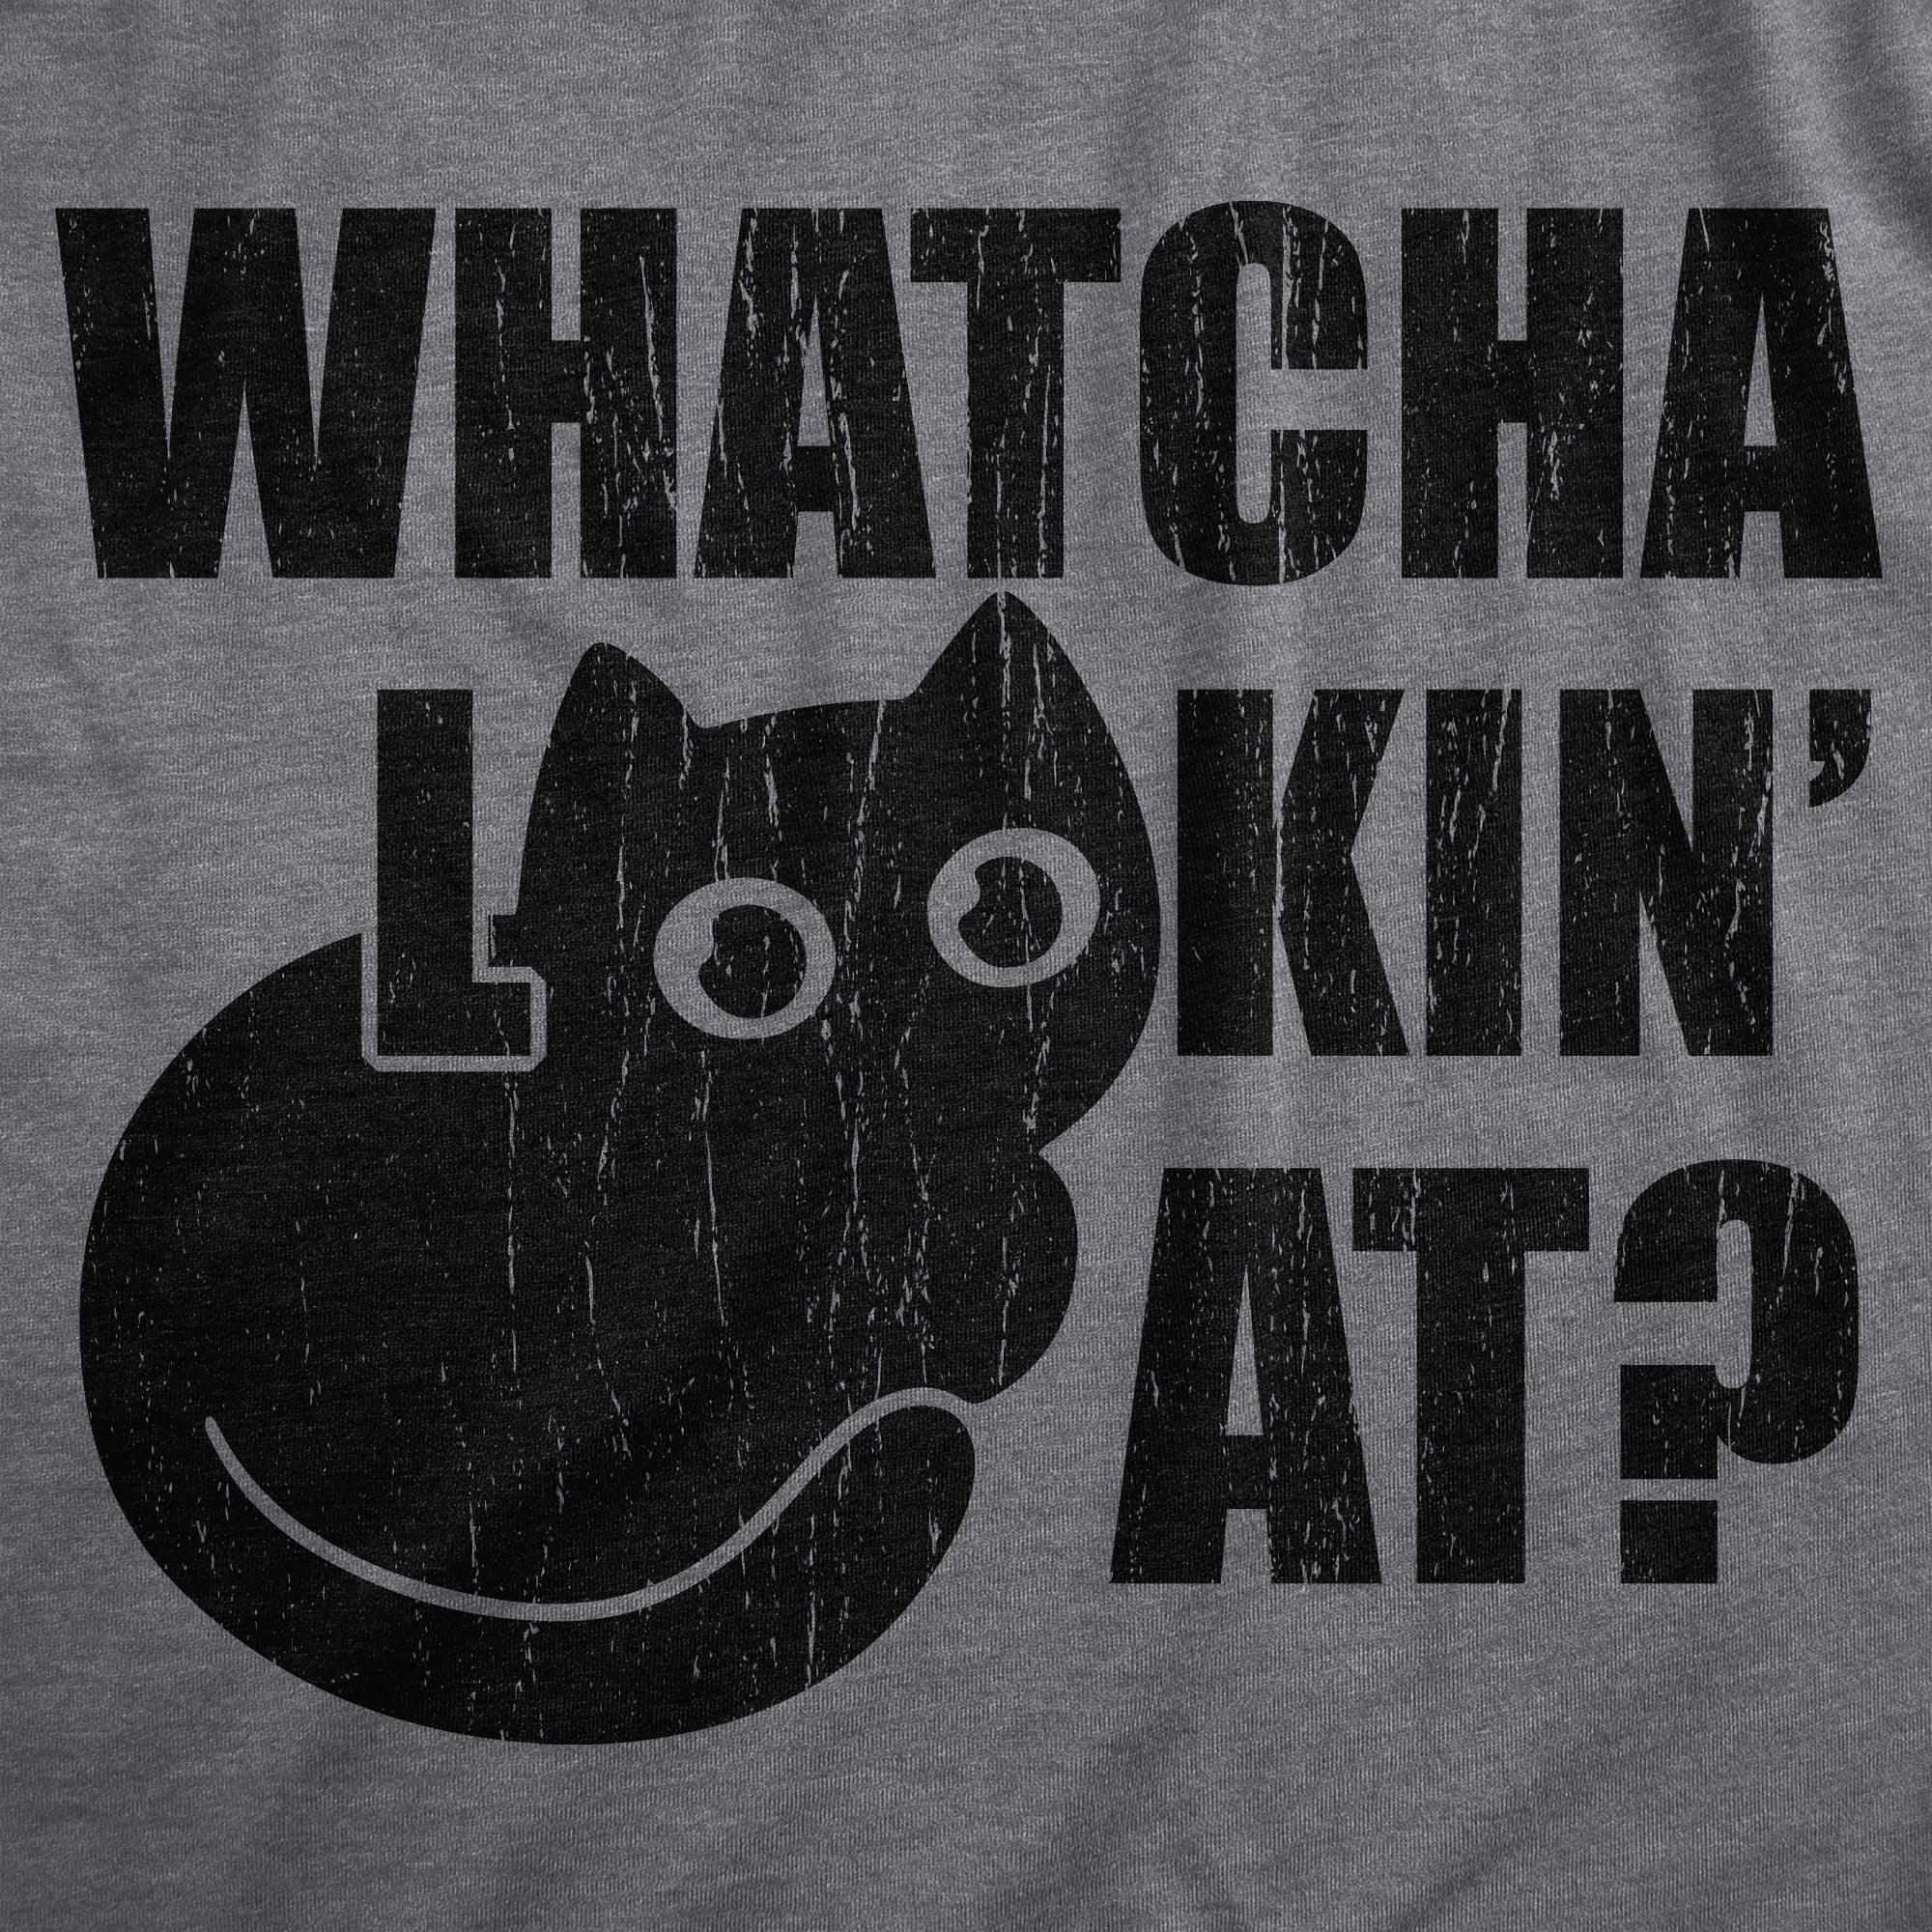 Funny Dark Heather Grey - Whatcha Lookin At Whatcha Lookin At Mens T Shirt Nerdy cat Tee